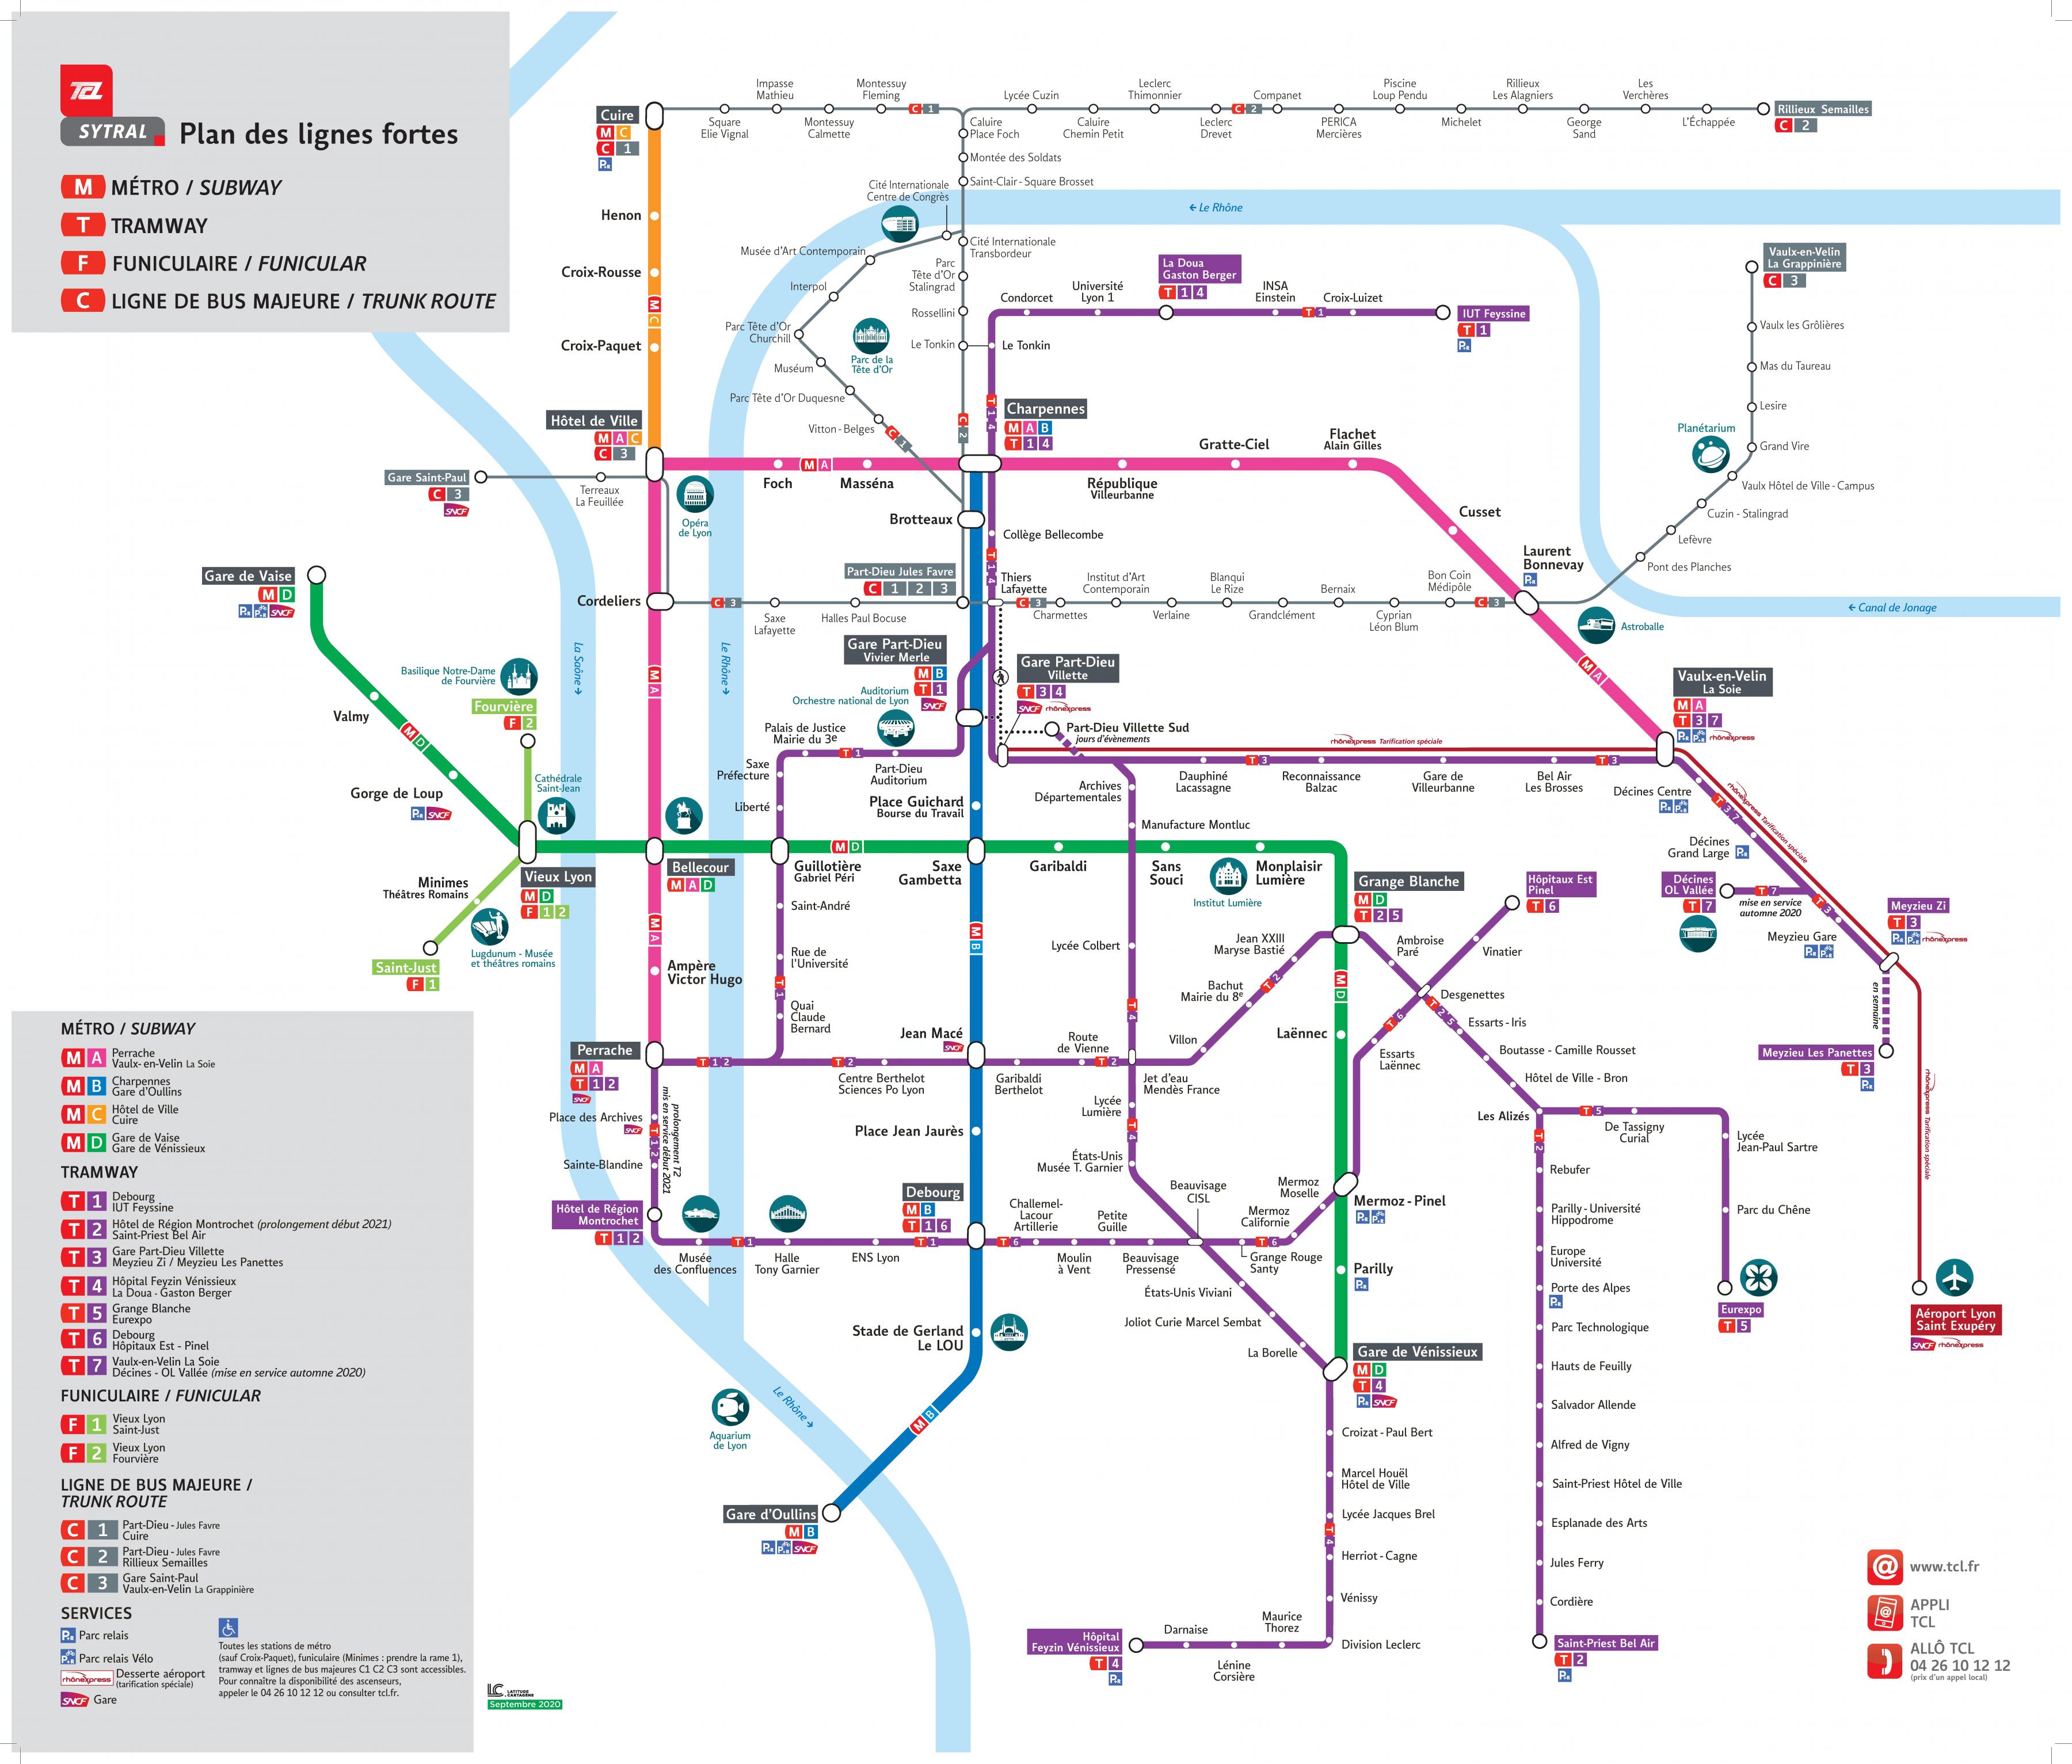 Map of Lyon metro: metro lines and metro stations of Lyon